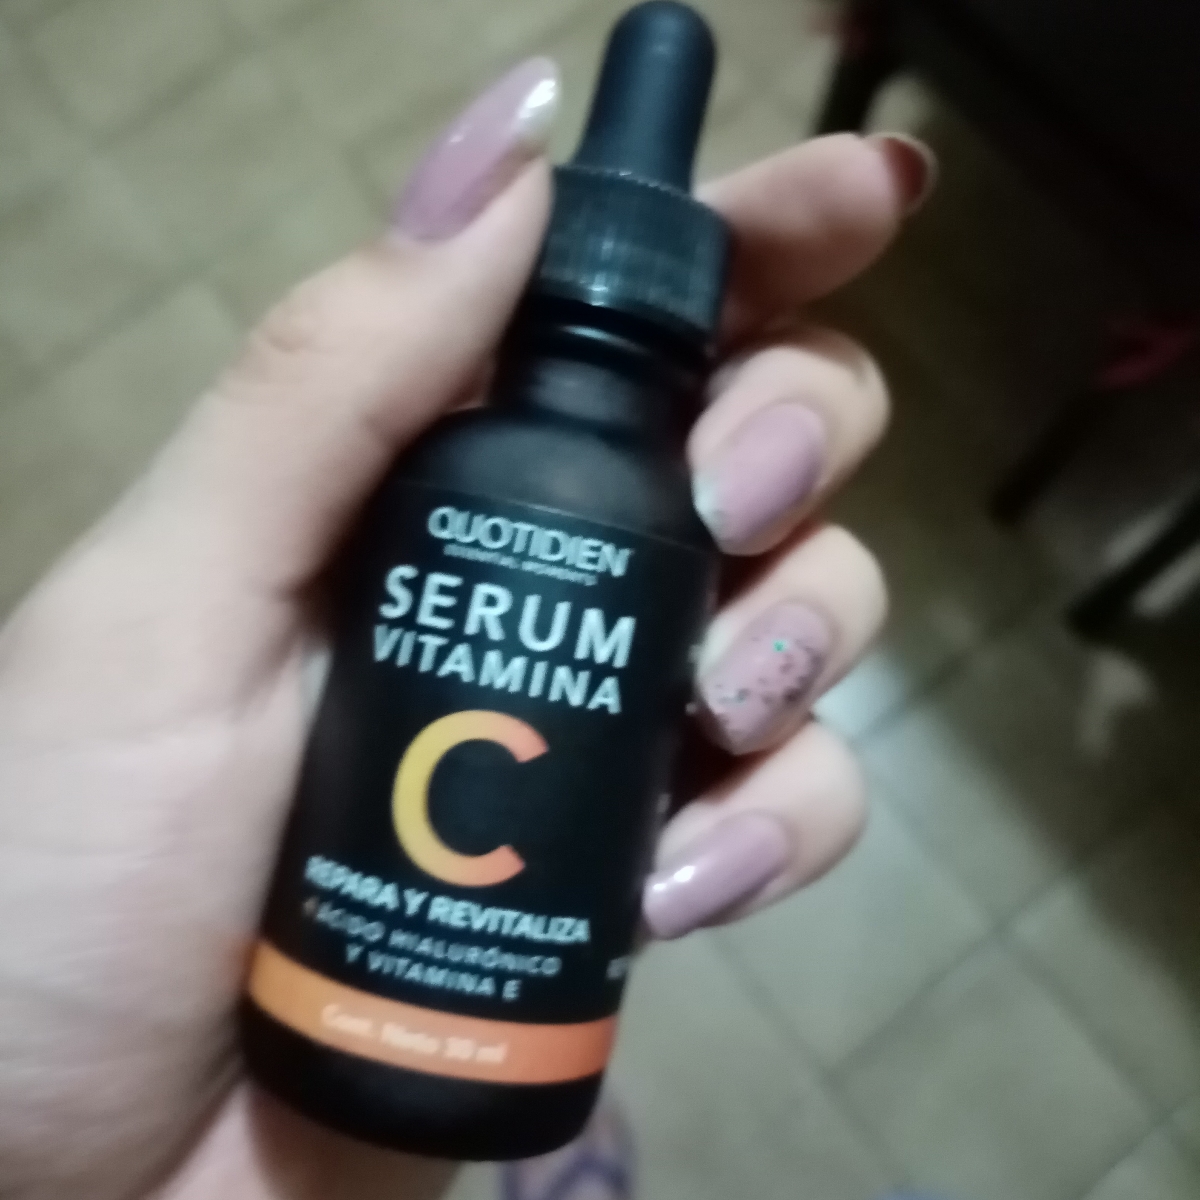 Quotidien Sérum Vitamina C Review | abillion